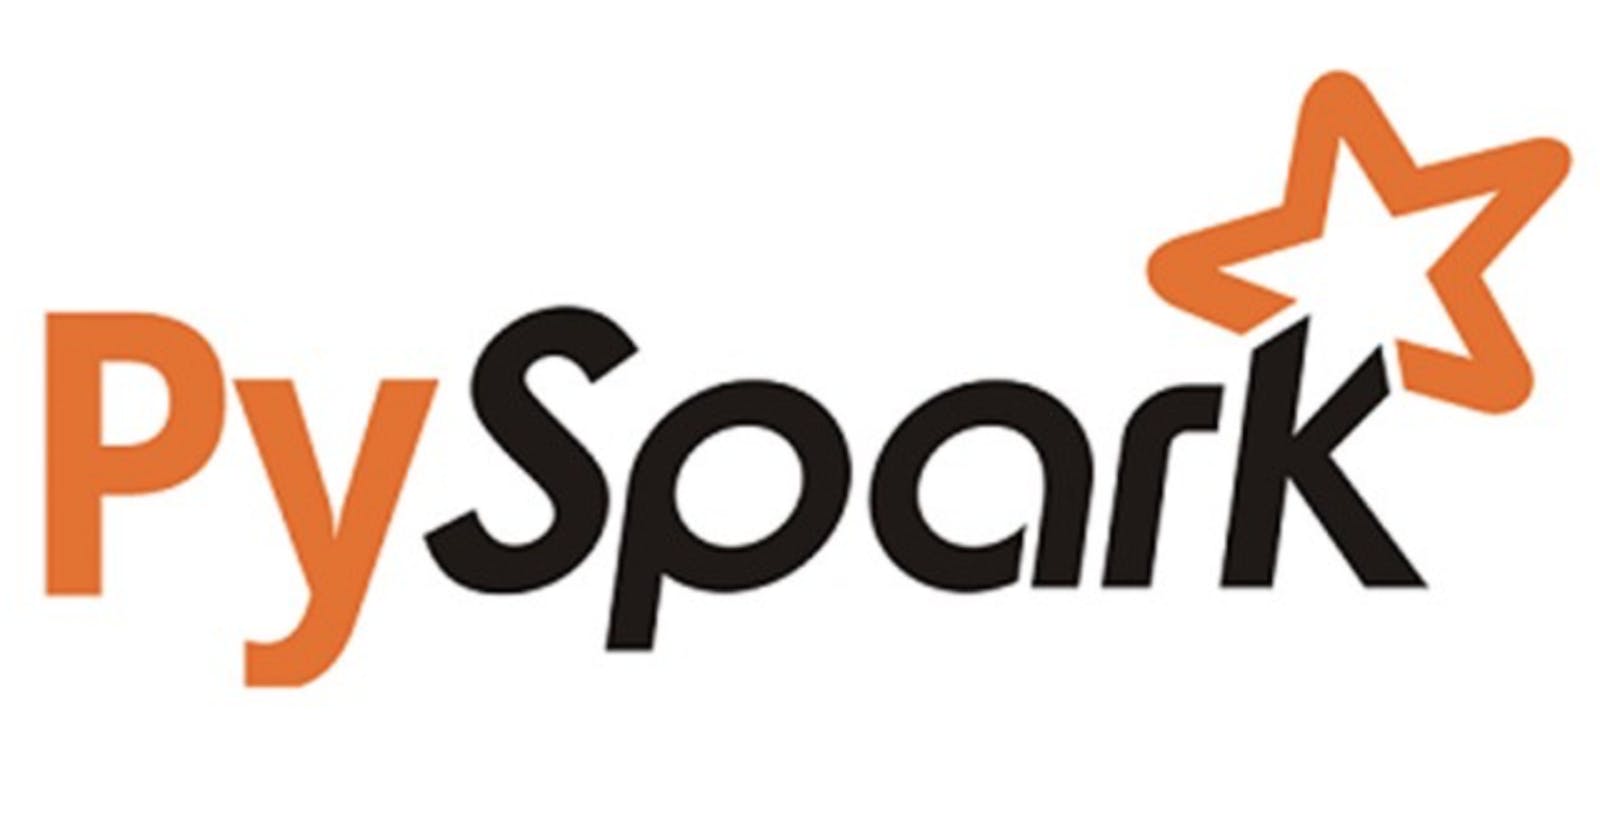 Unittesting Apache Spark Applications